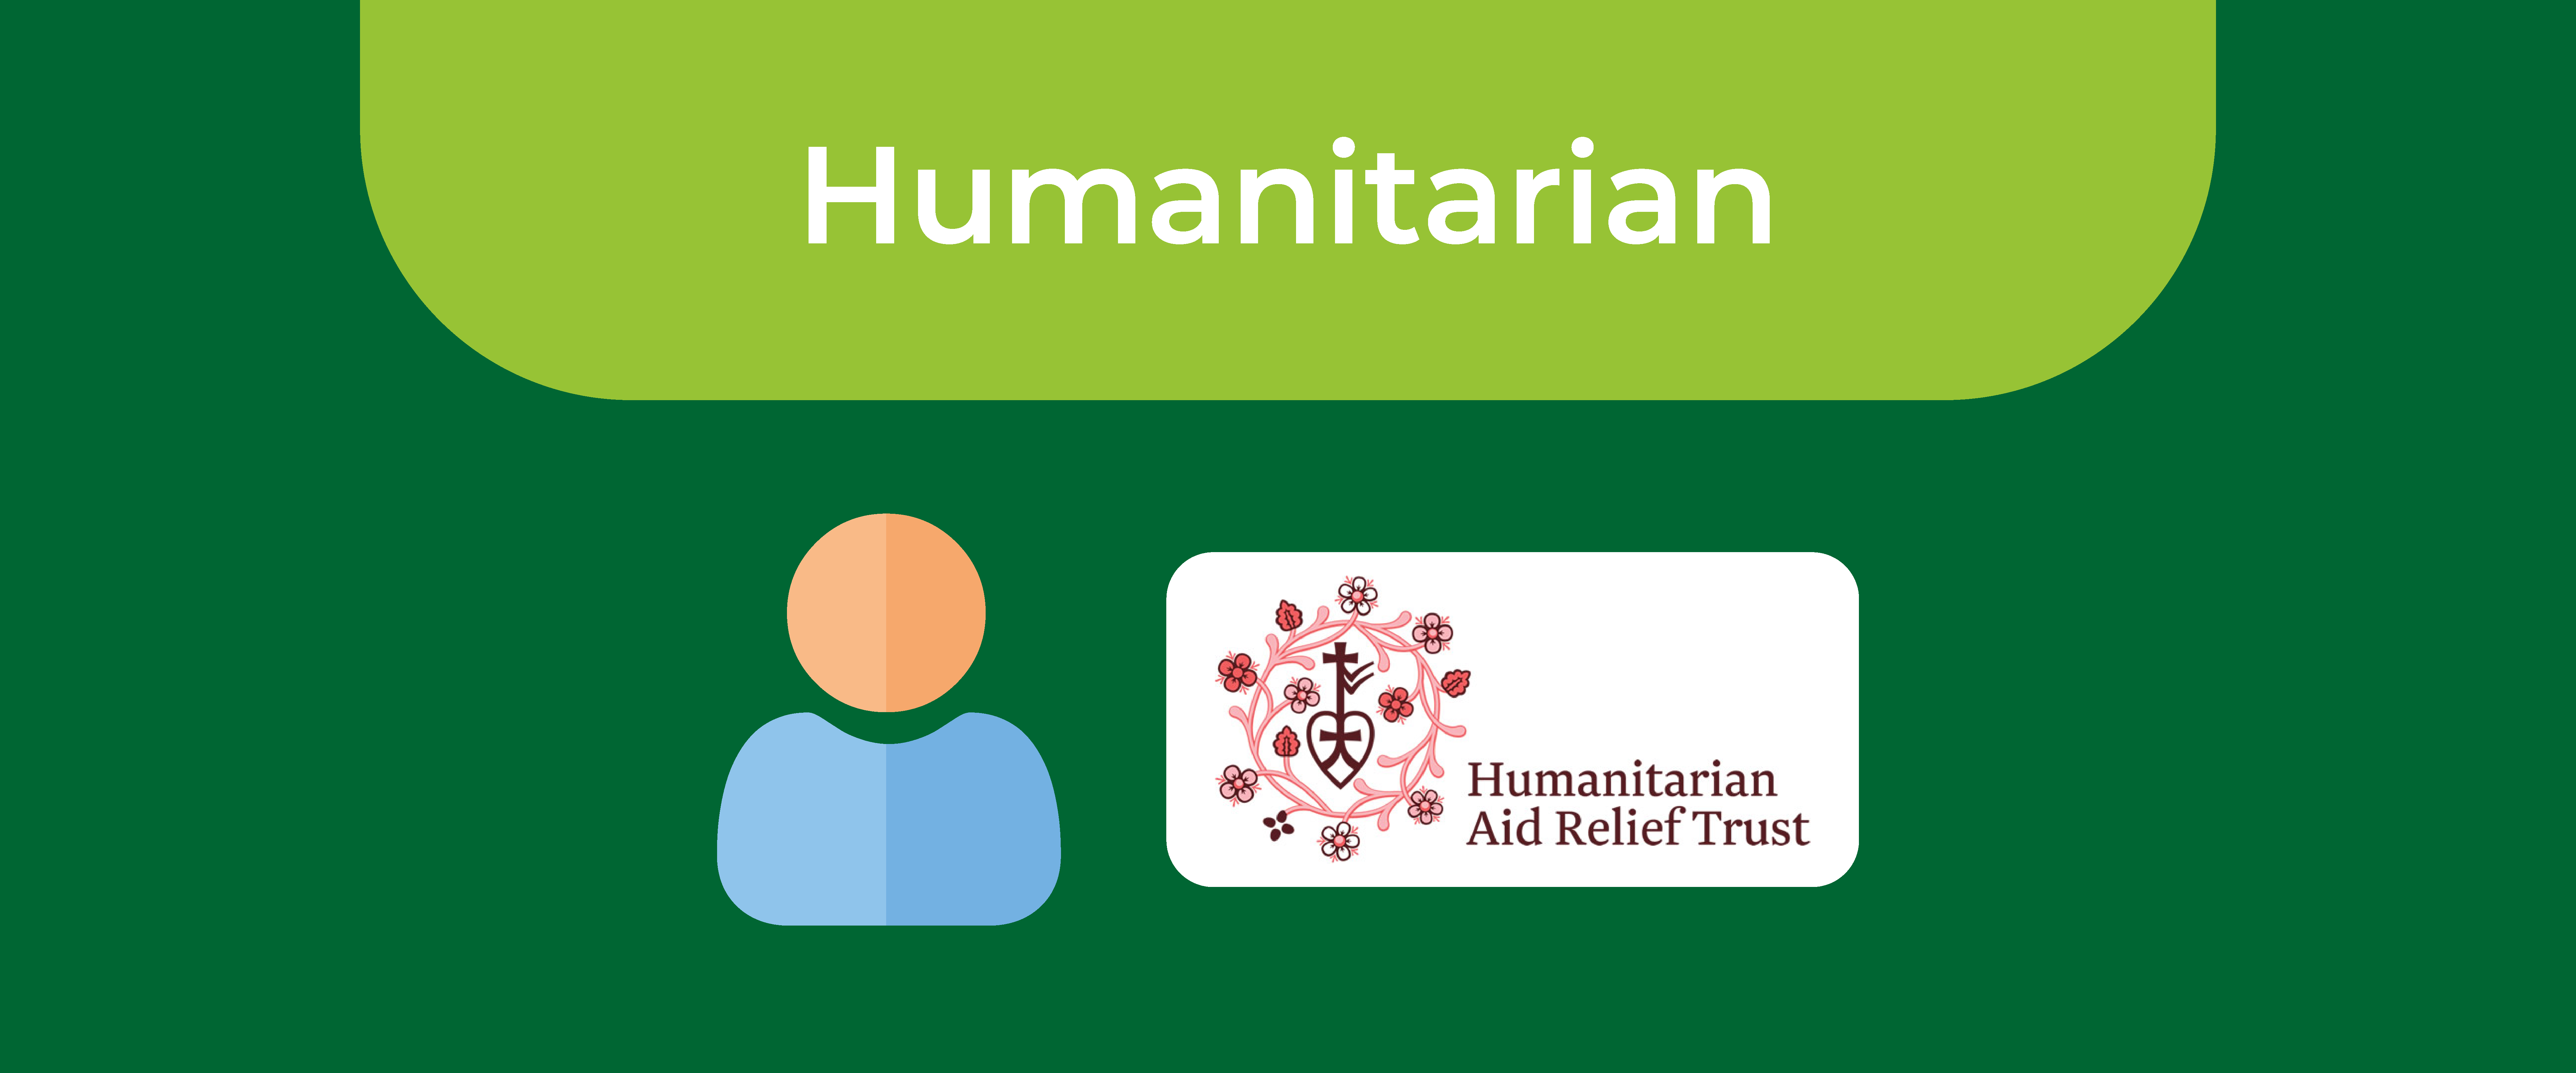 Project Longhurst - Humanitarian